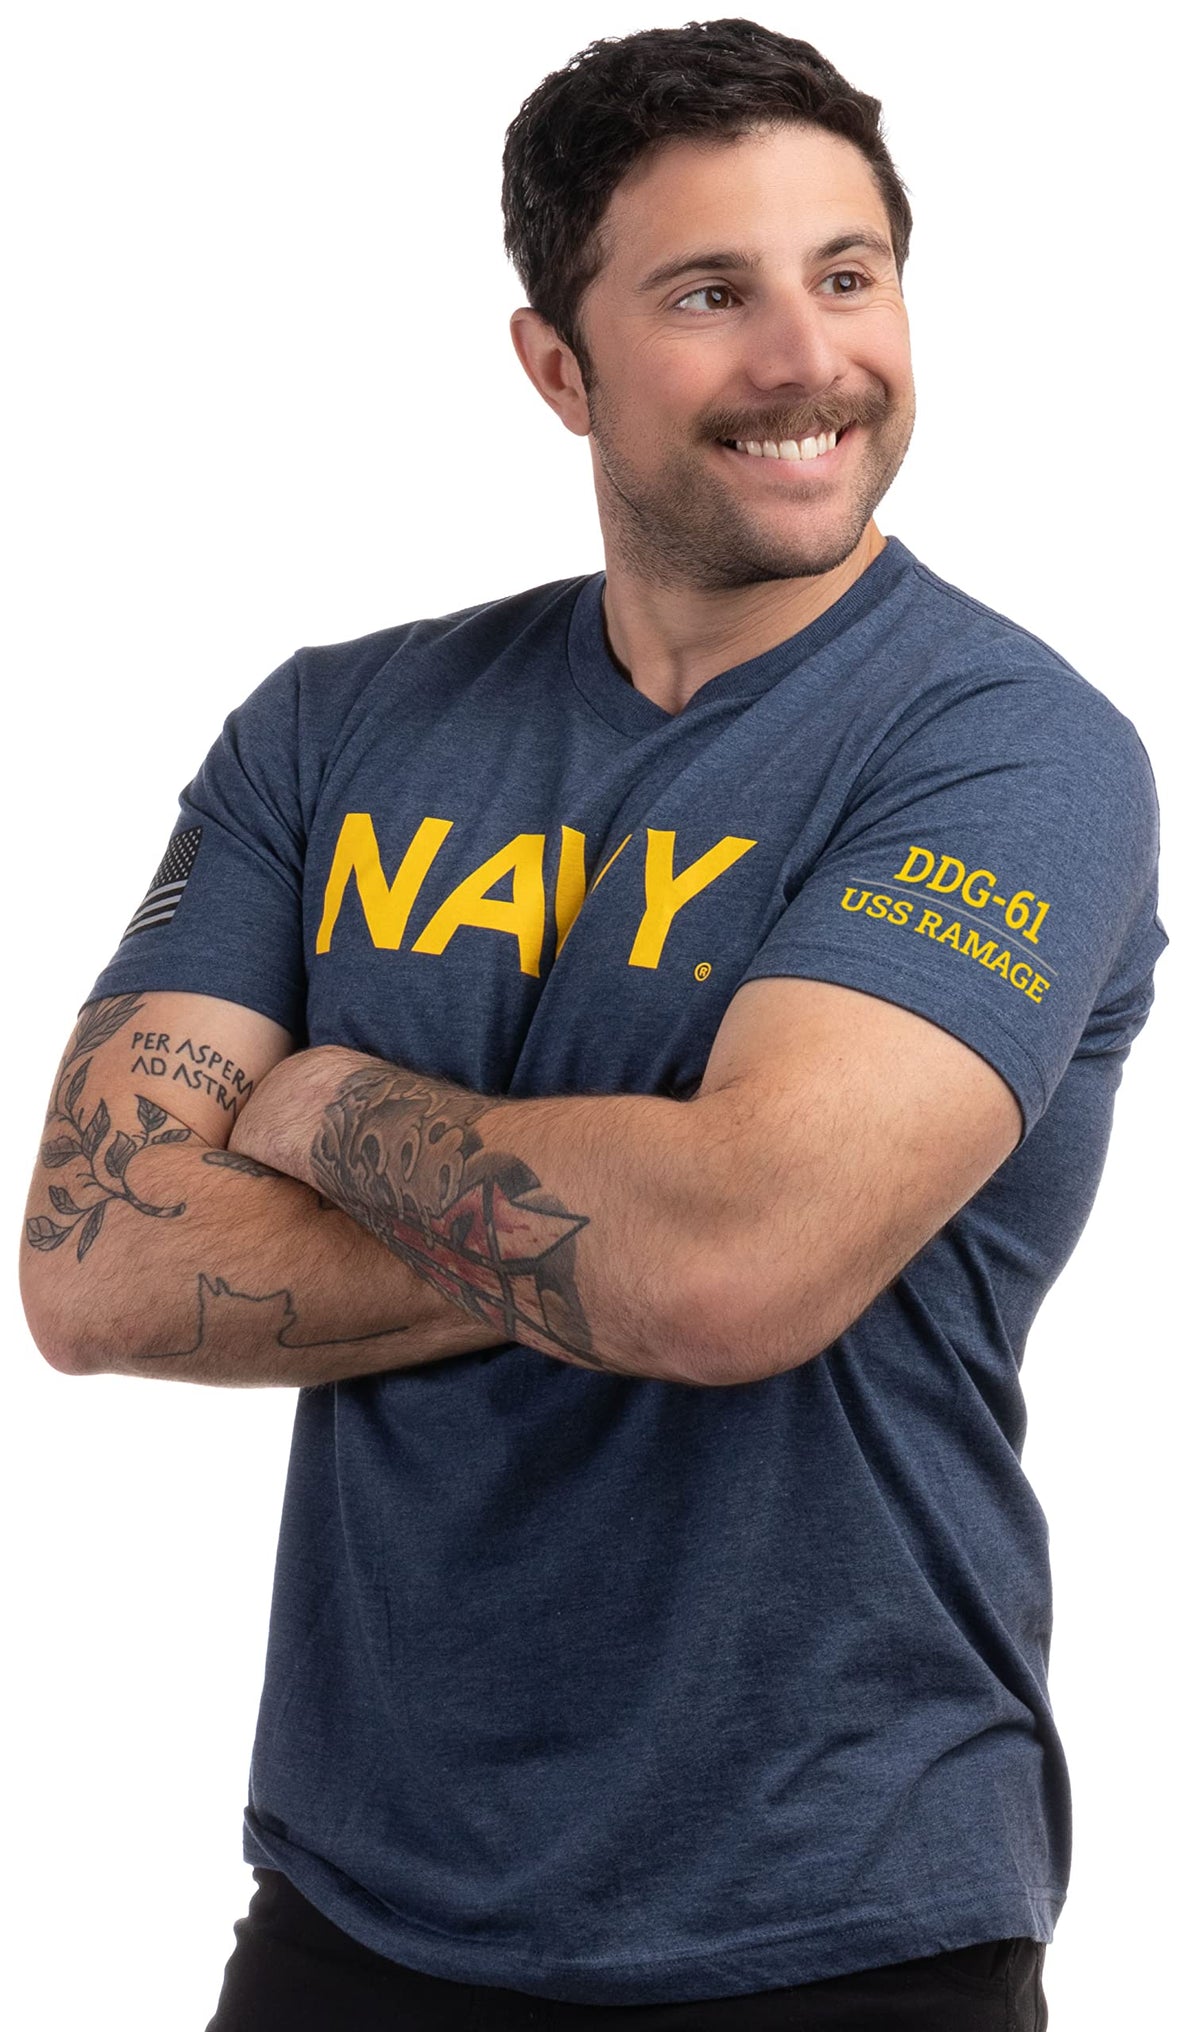 USS Ramage, DDG-61 | U.S. Navy Sailor Veteran USN United States Naval T-shirt for Men Women